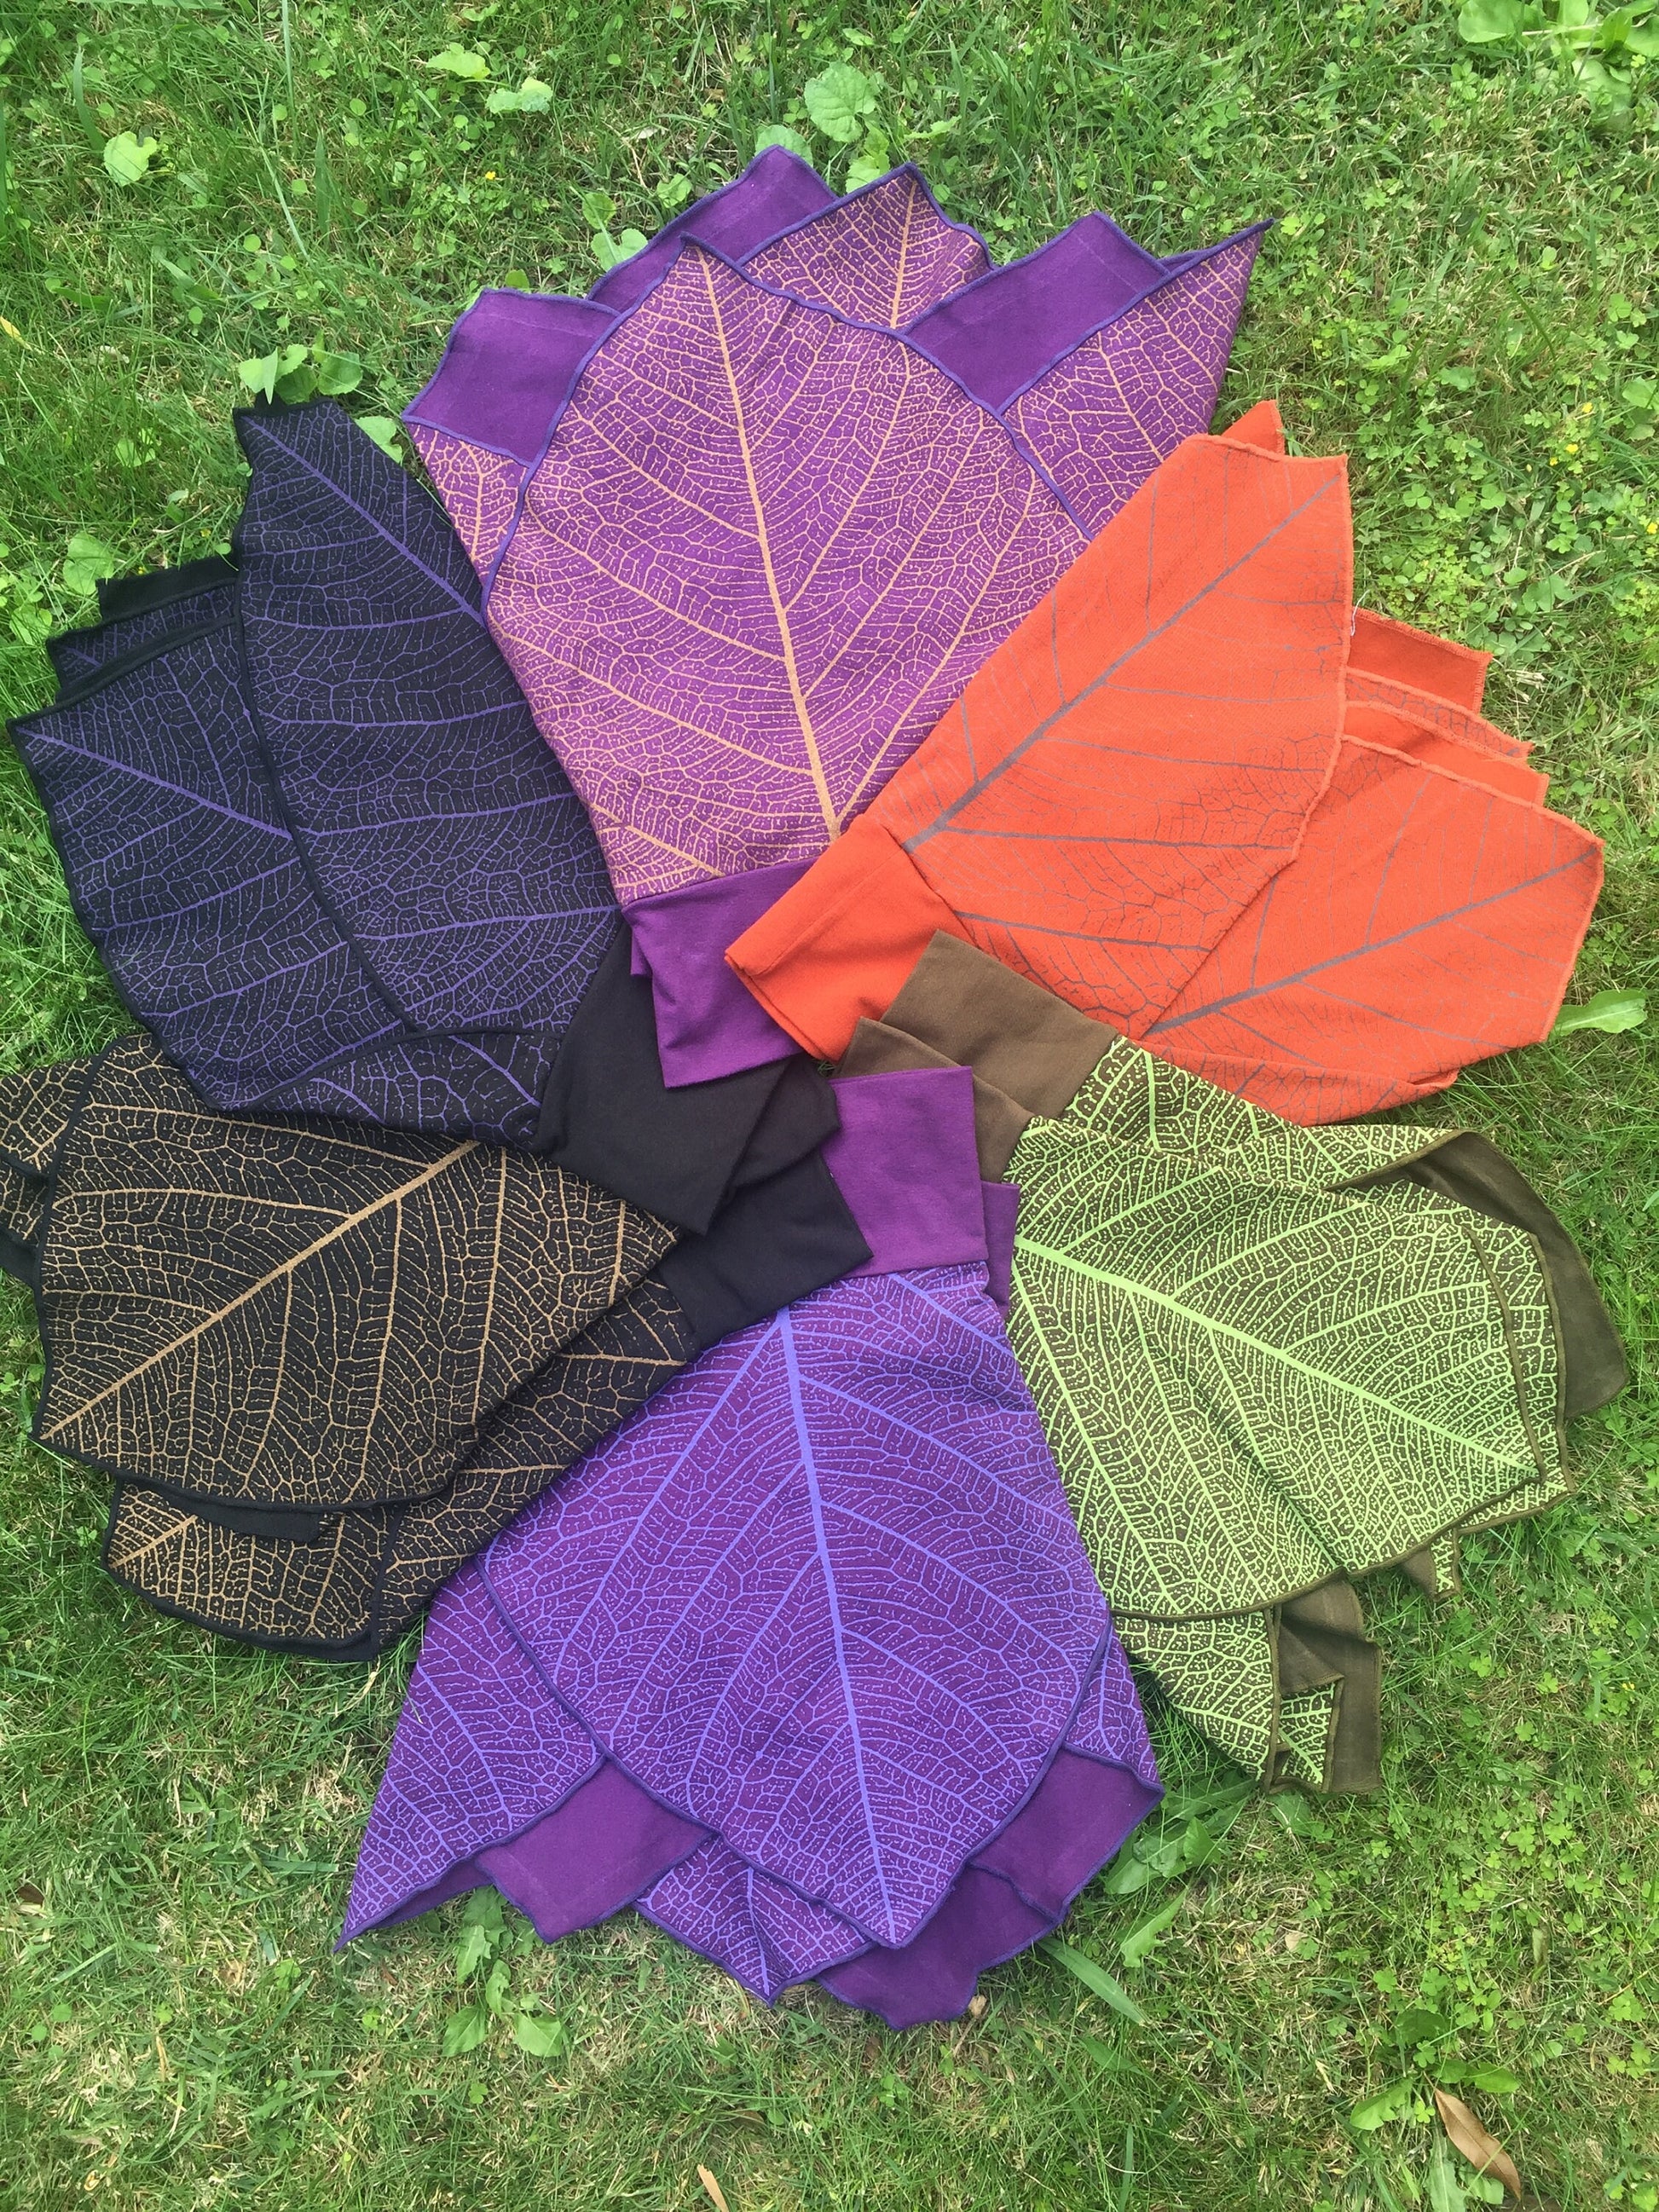 Leaf Print Mini Skirt - Faerie Wear - 6 Leaf Skirt - Elf Wares - Pixie Clothing - Everyday Faerie